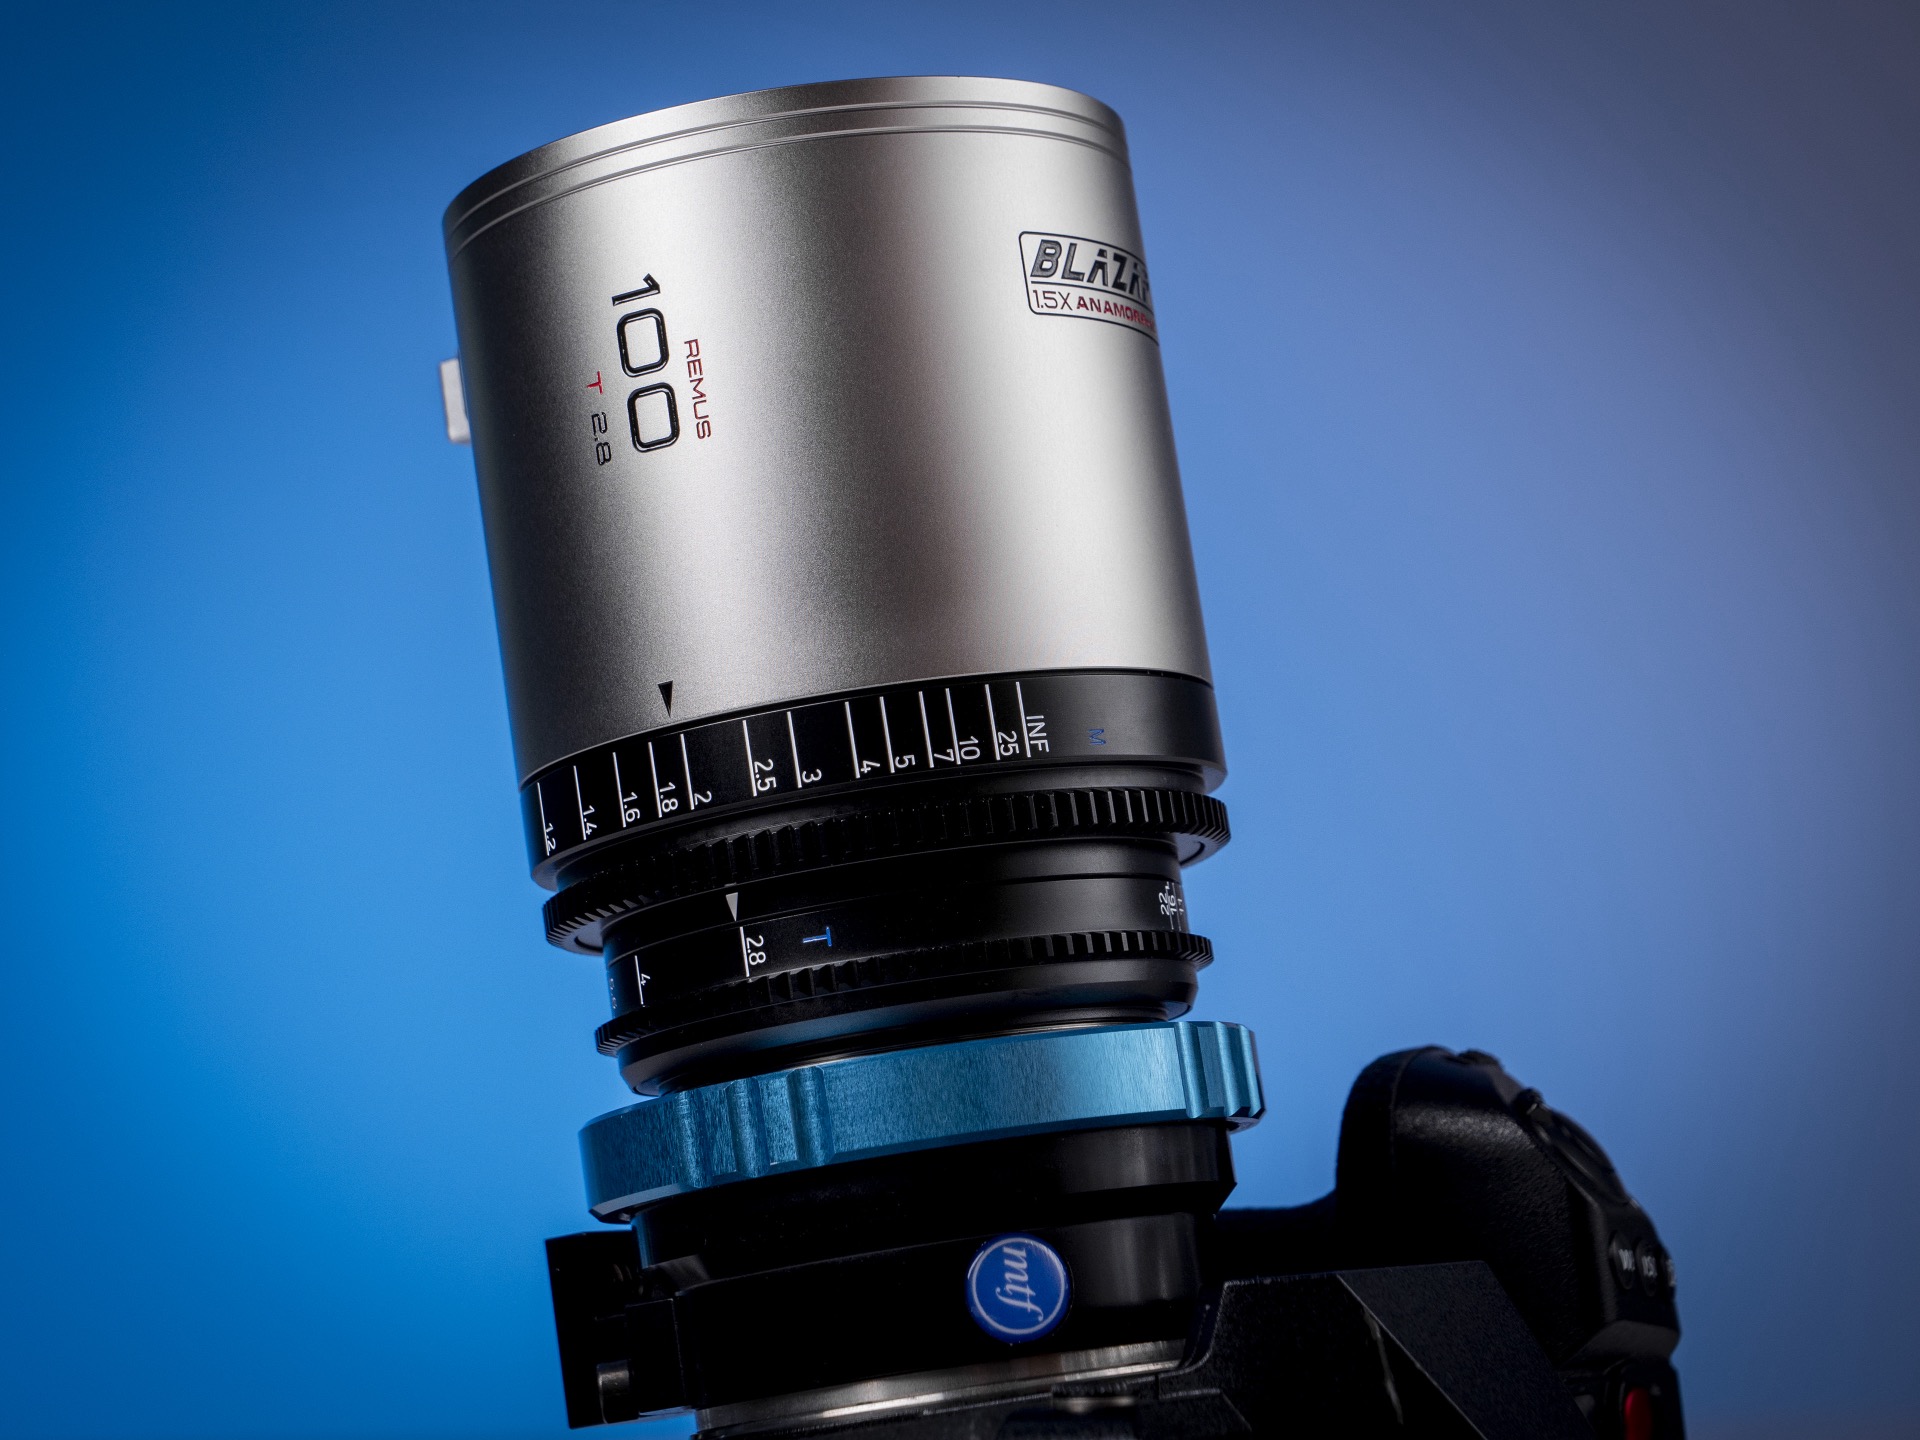 Review: Blazar Remus 1.5x anamorphic lenses 22